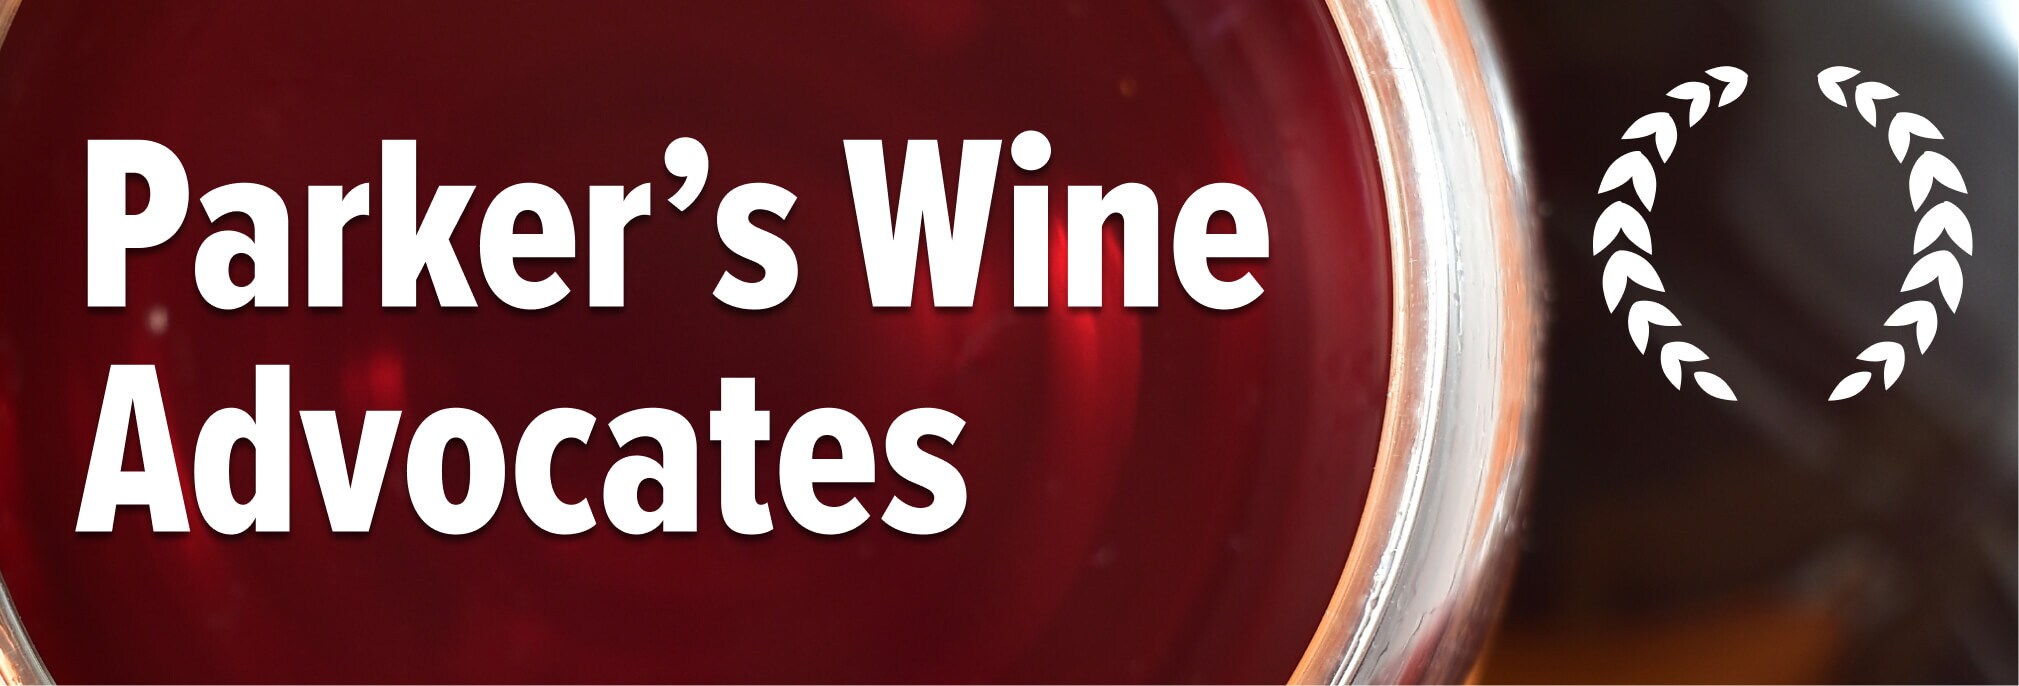 Wine advocates